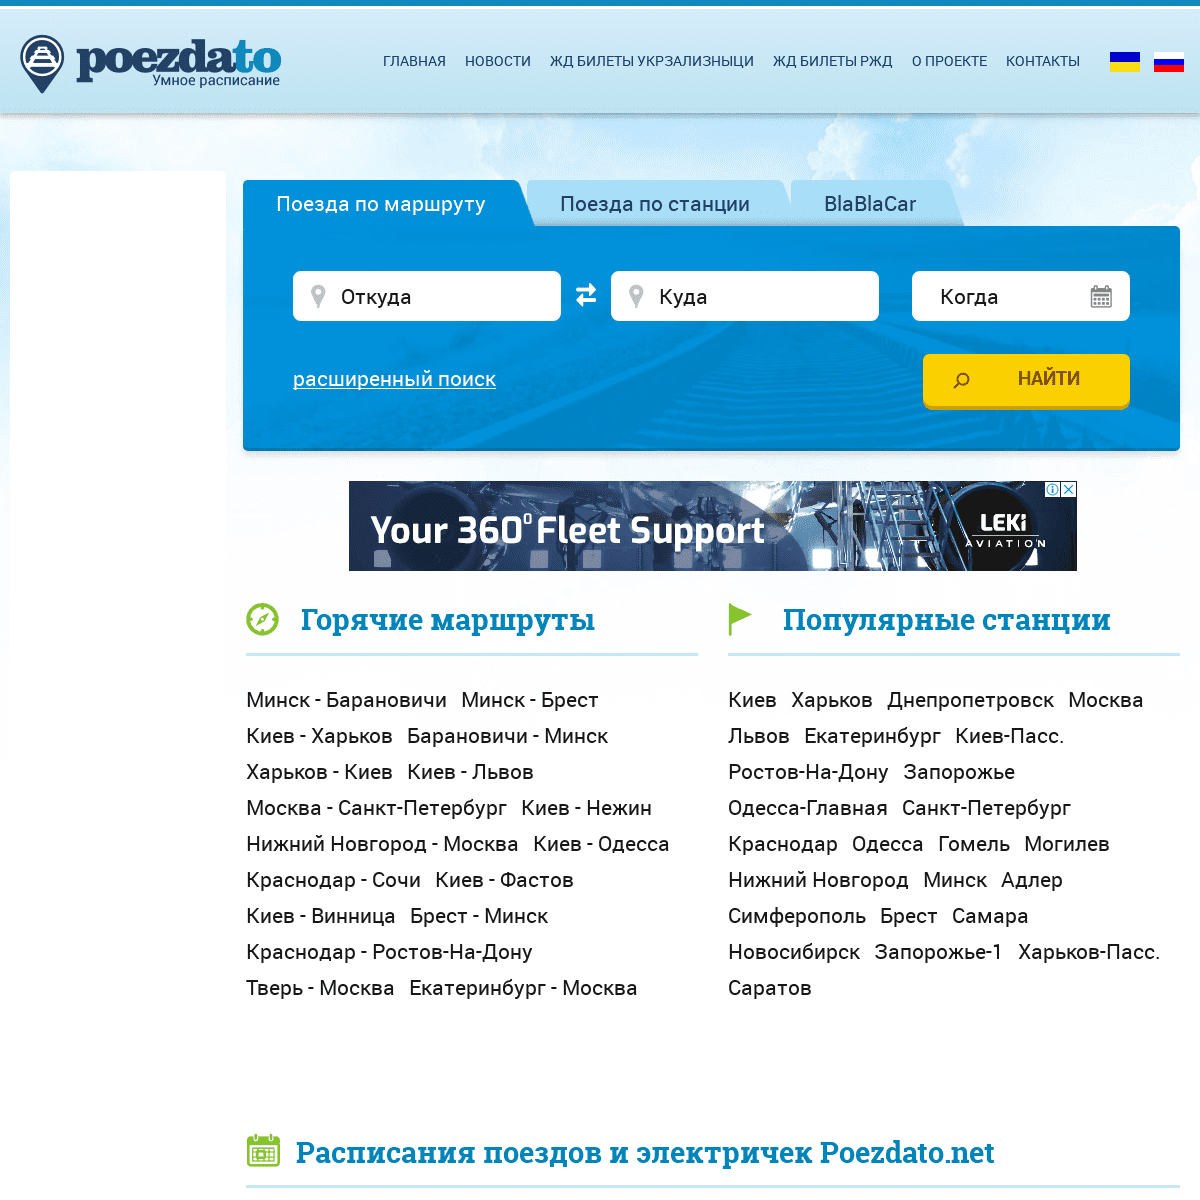 A complete backup of poezdato.net